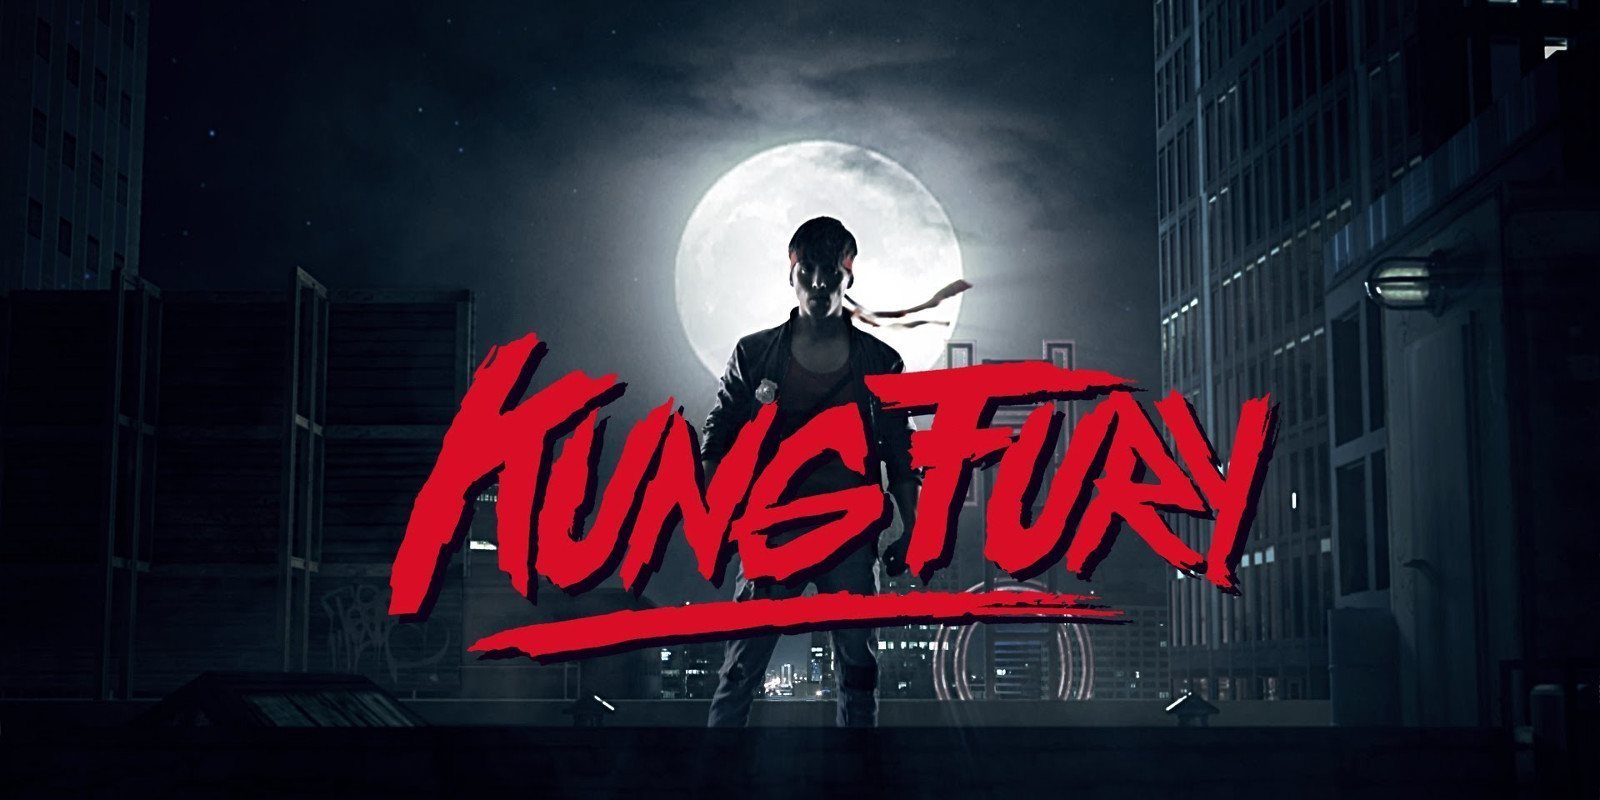 'Kung Fury': Michael Fassbender protagonista del largometraje